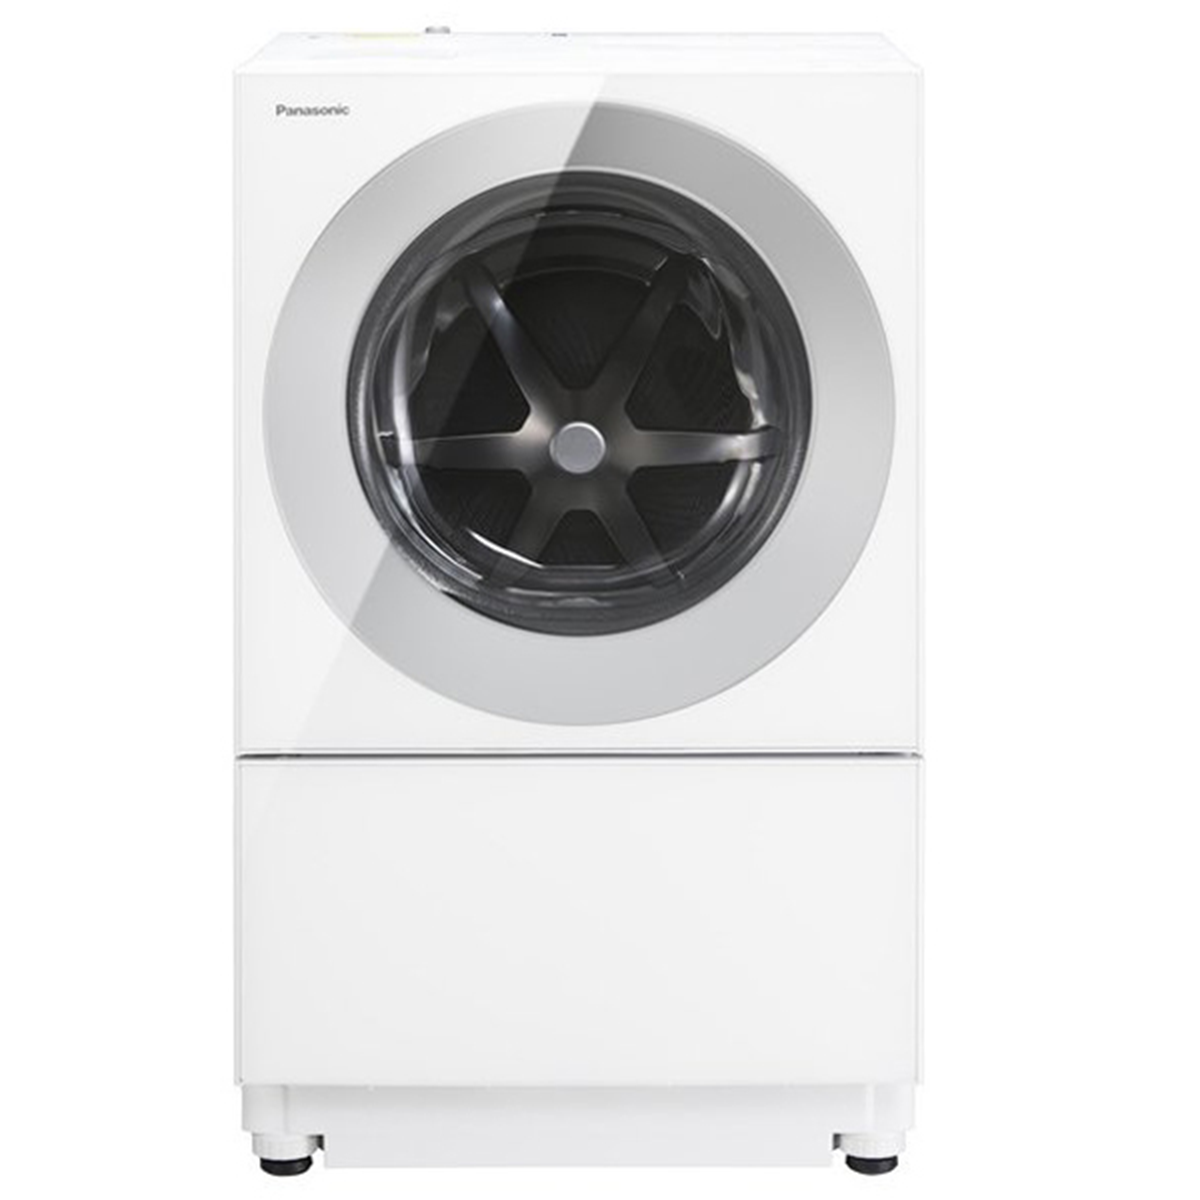 Taka 様専用 Panasonicドラム式洗濯機 NA-VG2200 美品 - 洗濯機